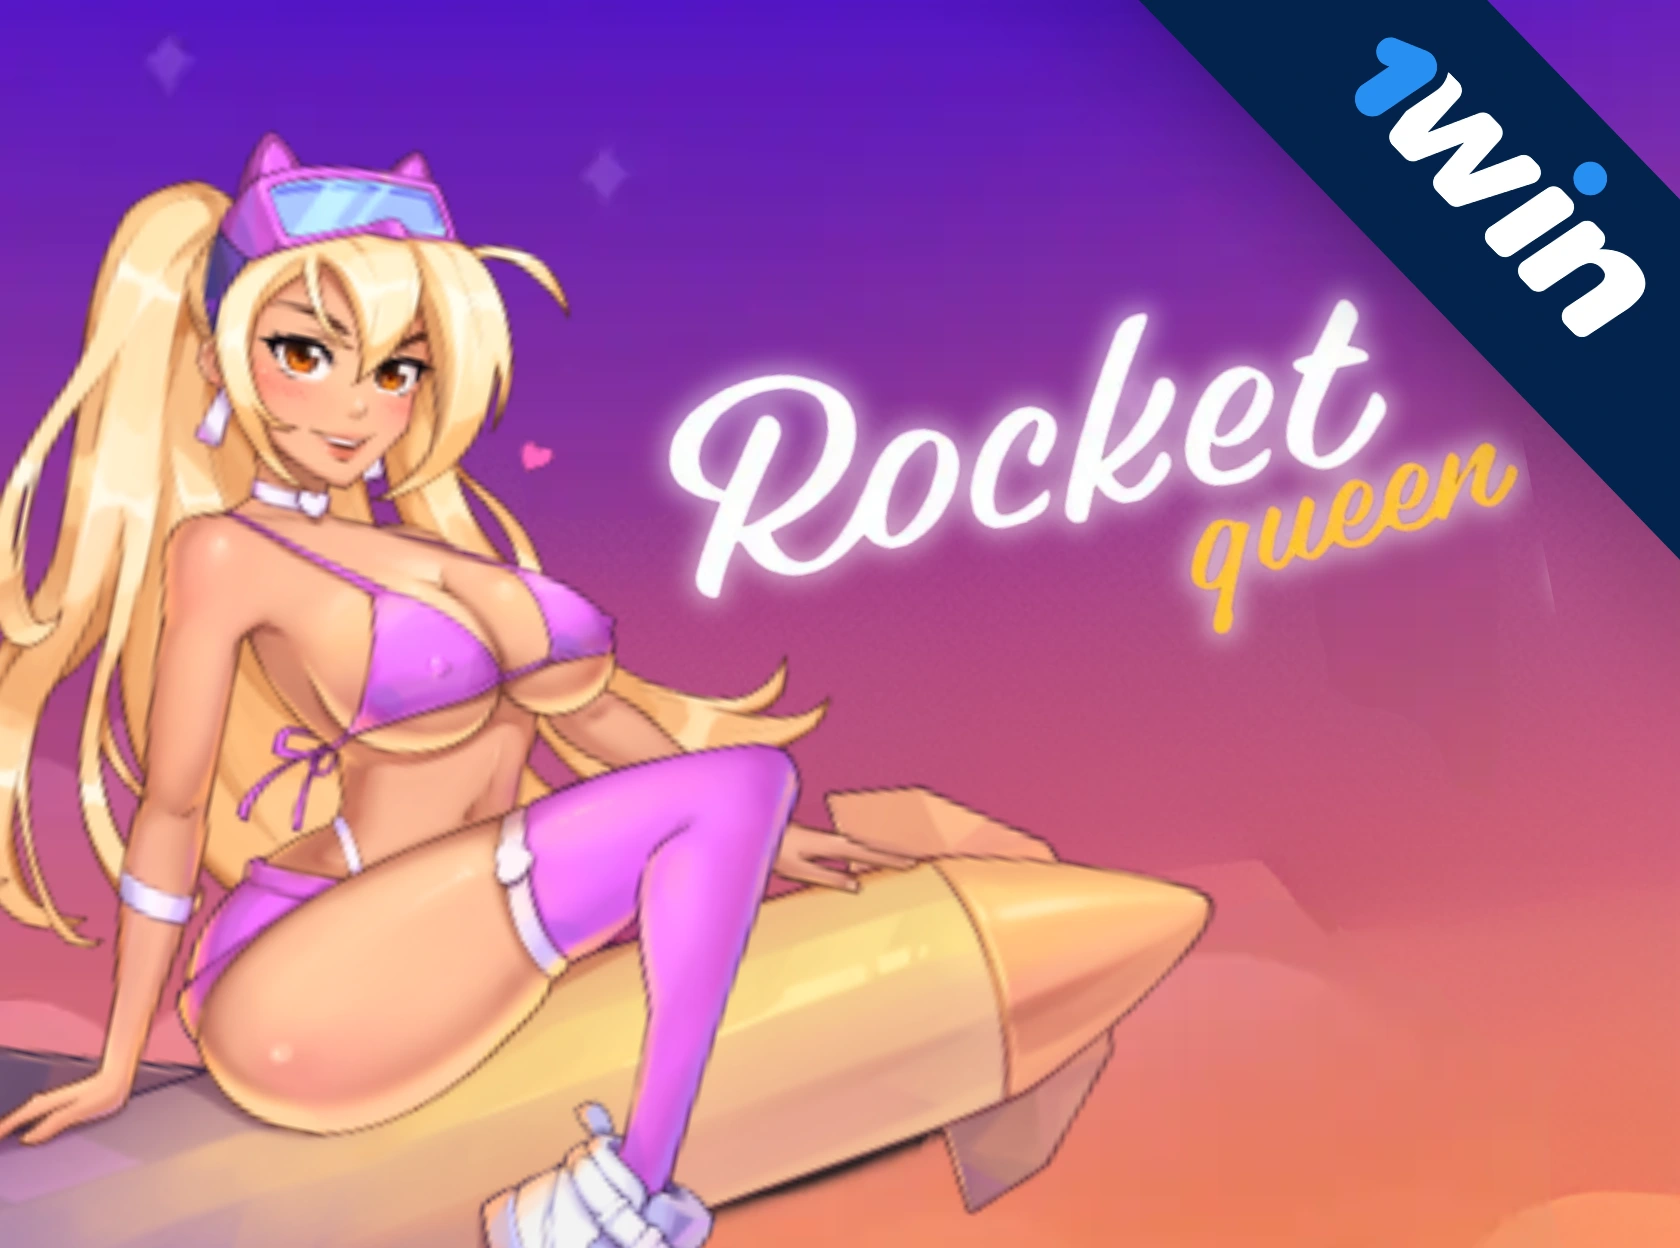 Rocket Queen 1win - игра на деньги играть онлайн